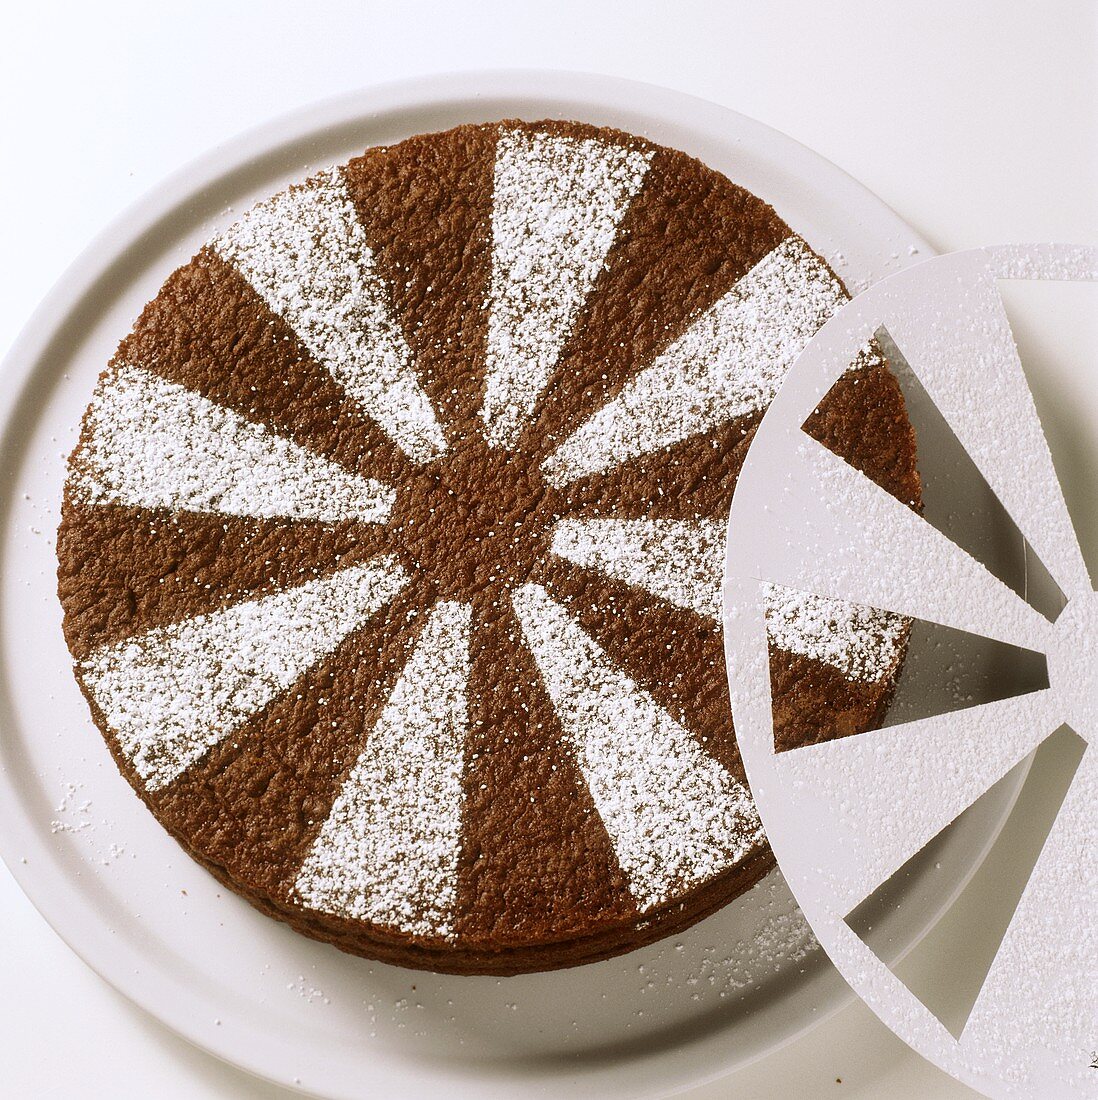 Decorating chocolate cake with icing sugar